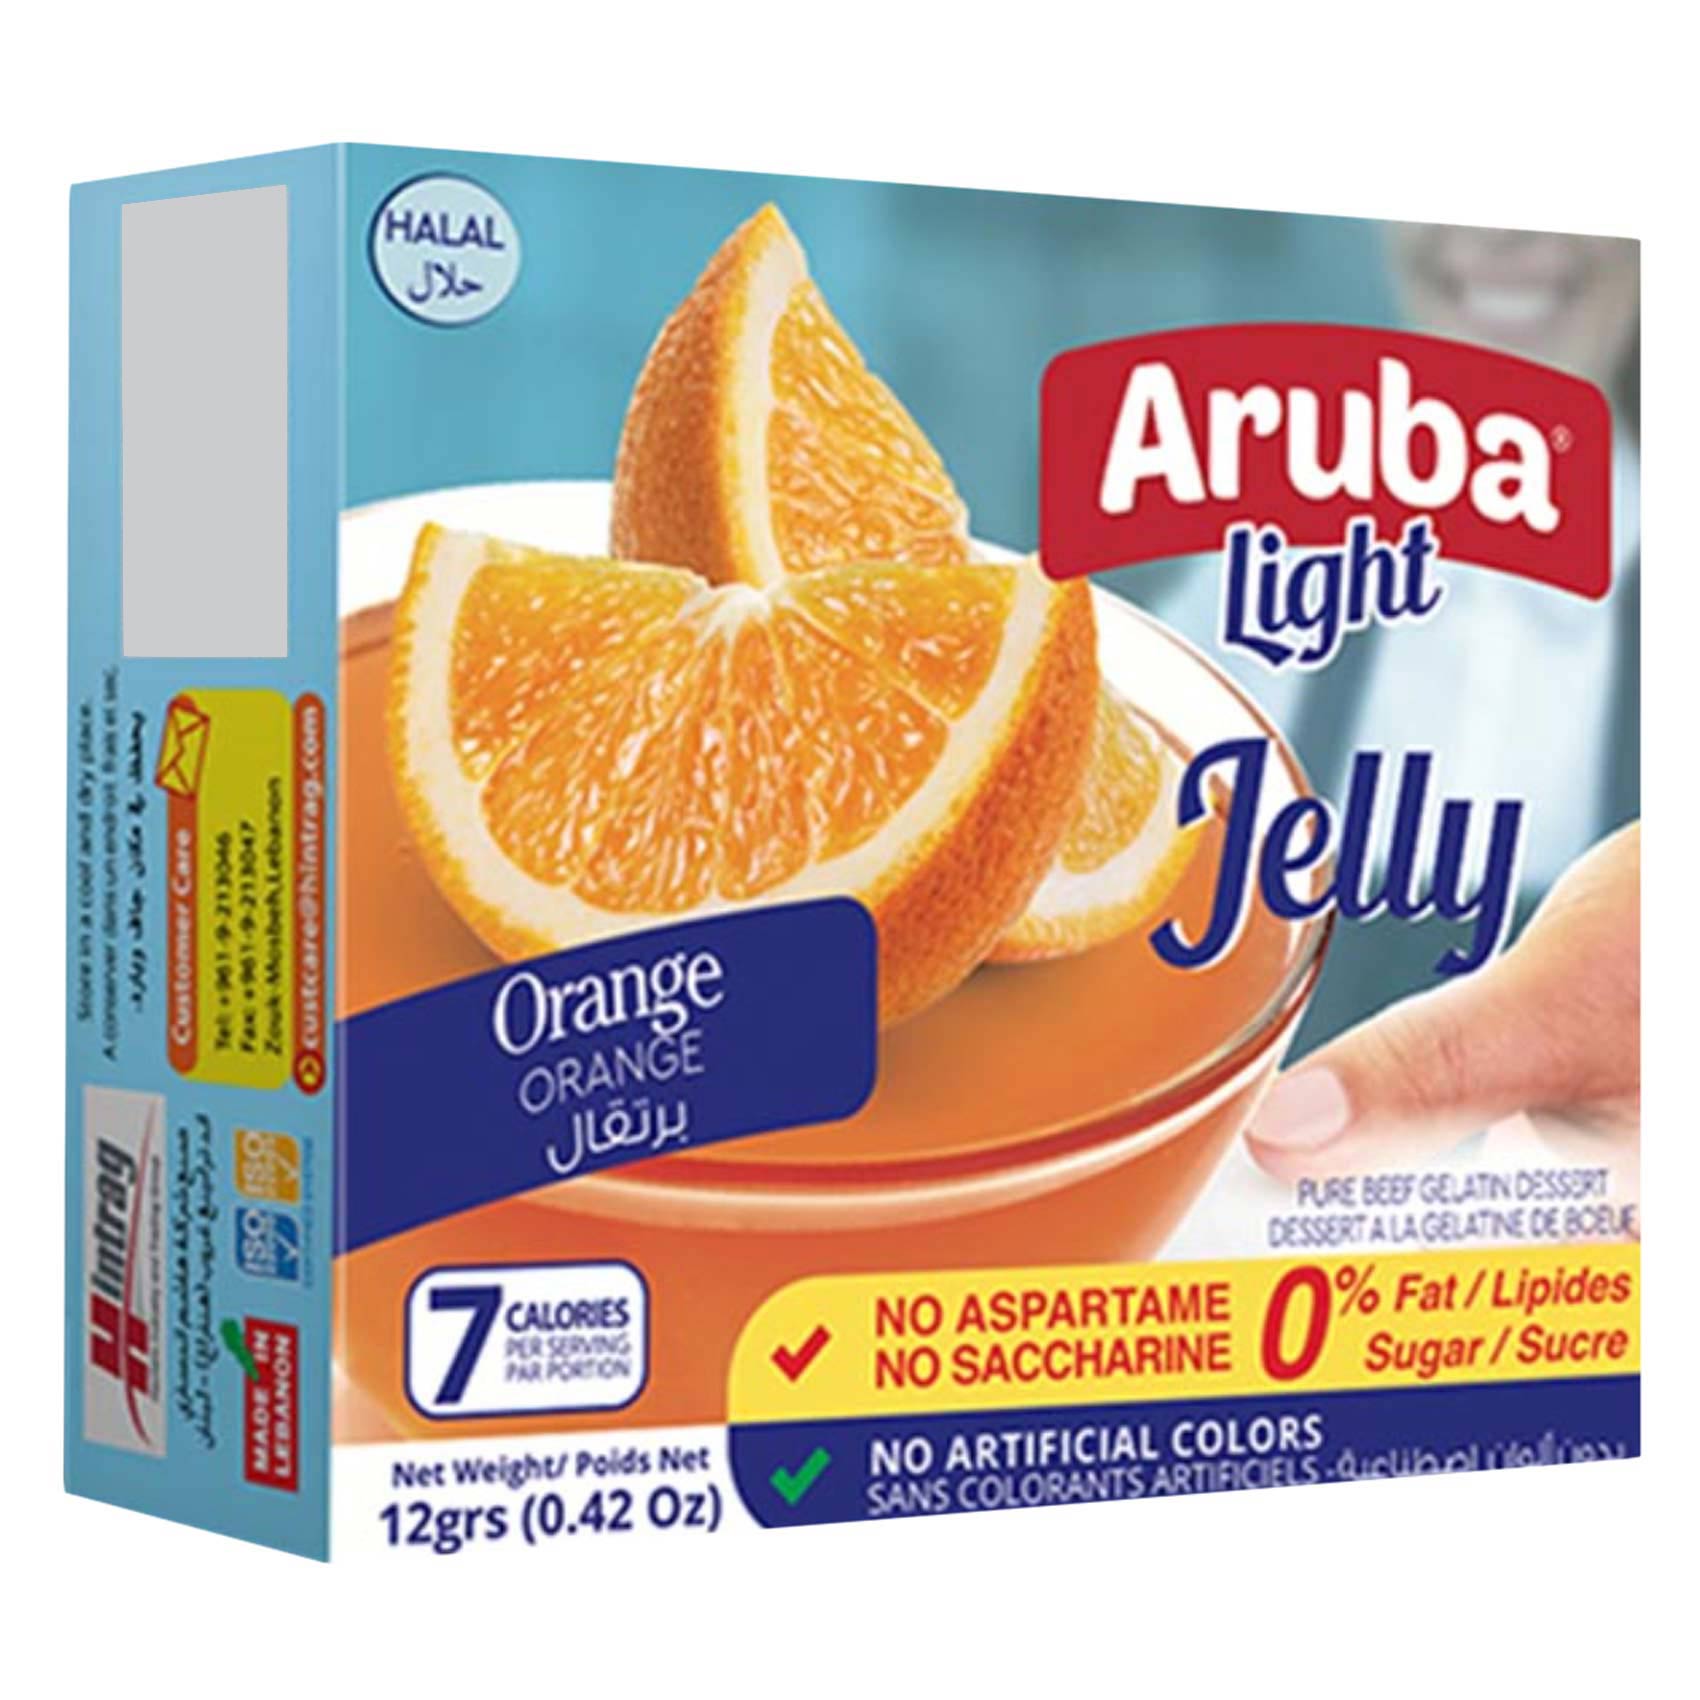 Aruba Diet Orange Light Jelly 12g